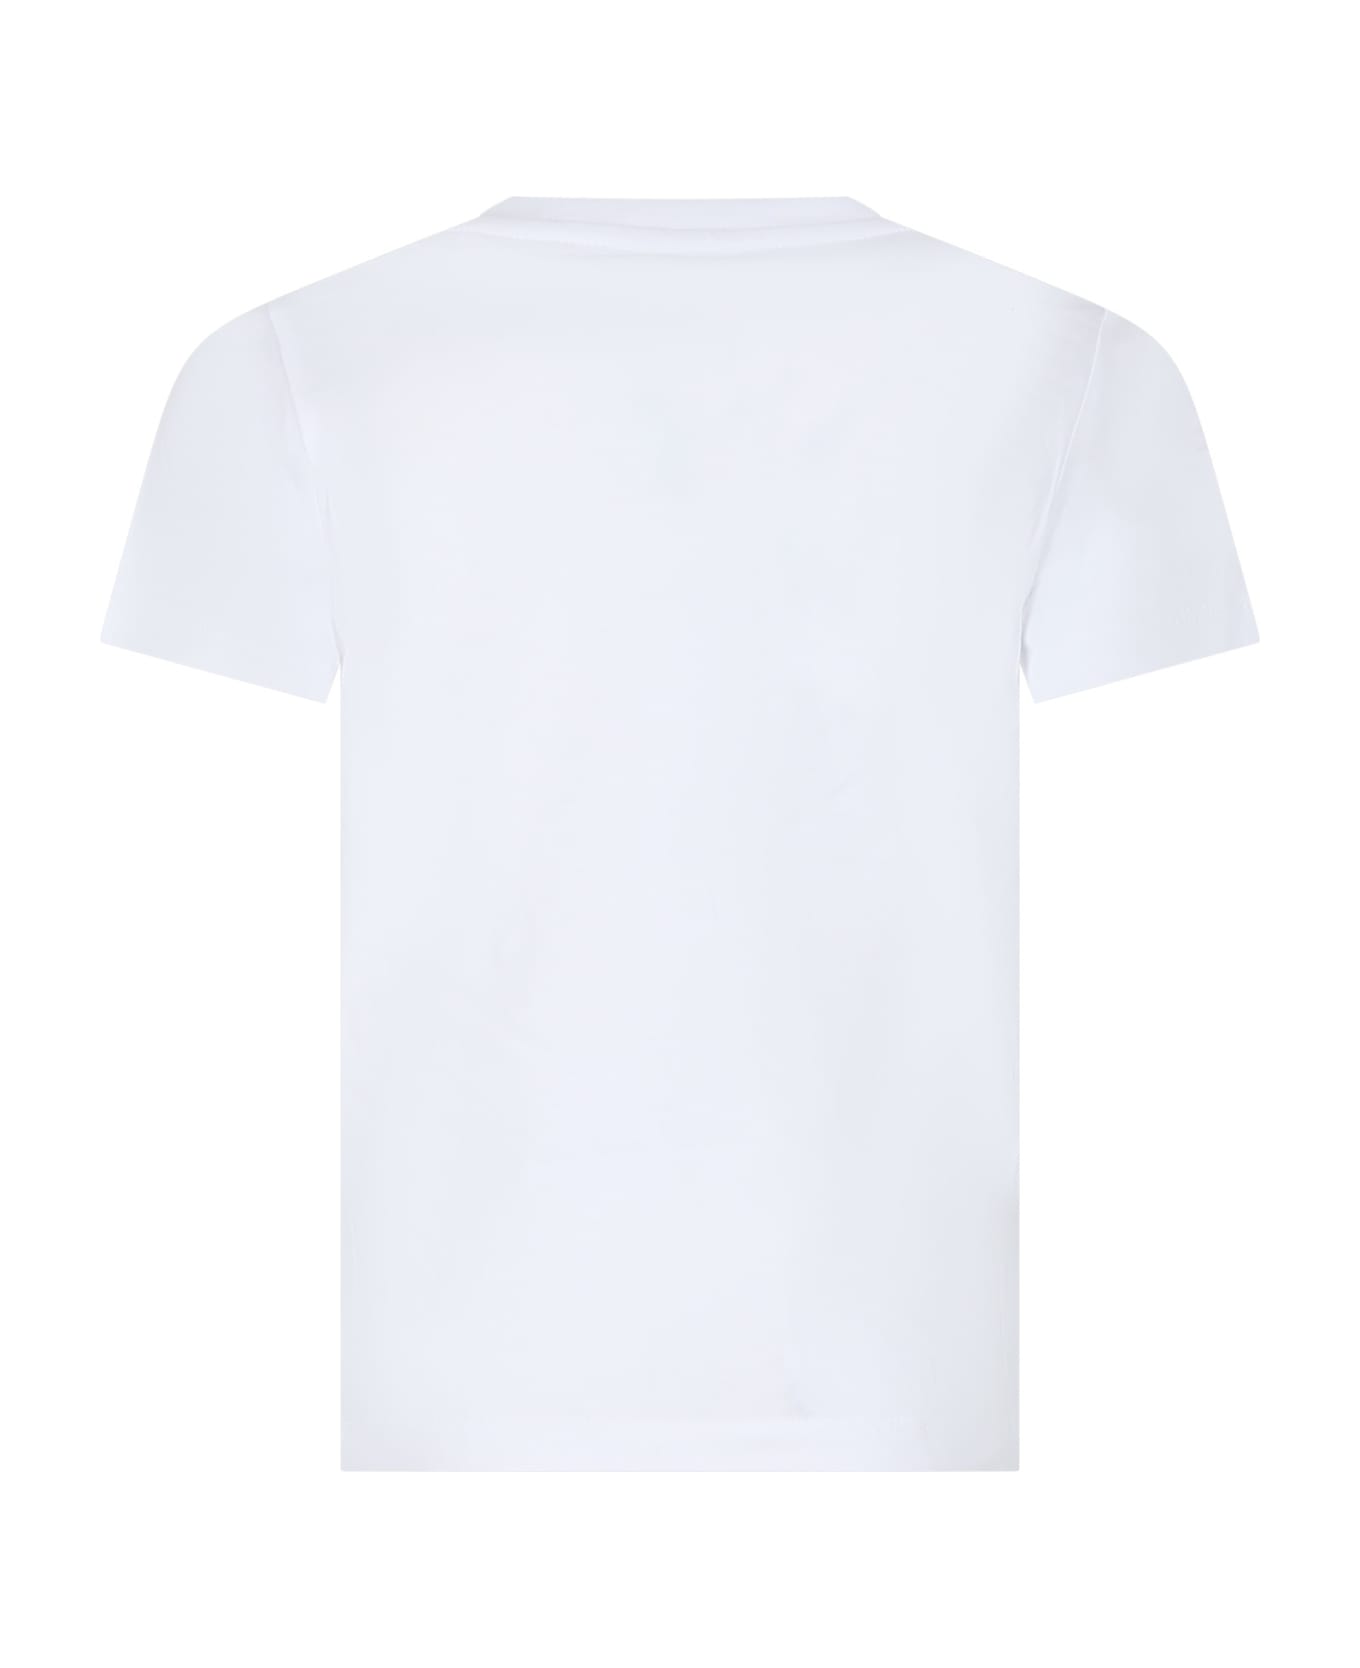 Kenzo Kids White T-shirt For Boy With Iconic Elephant - White